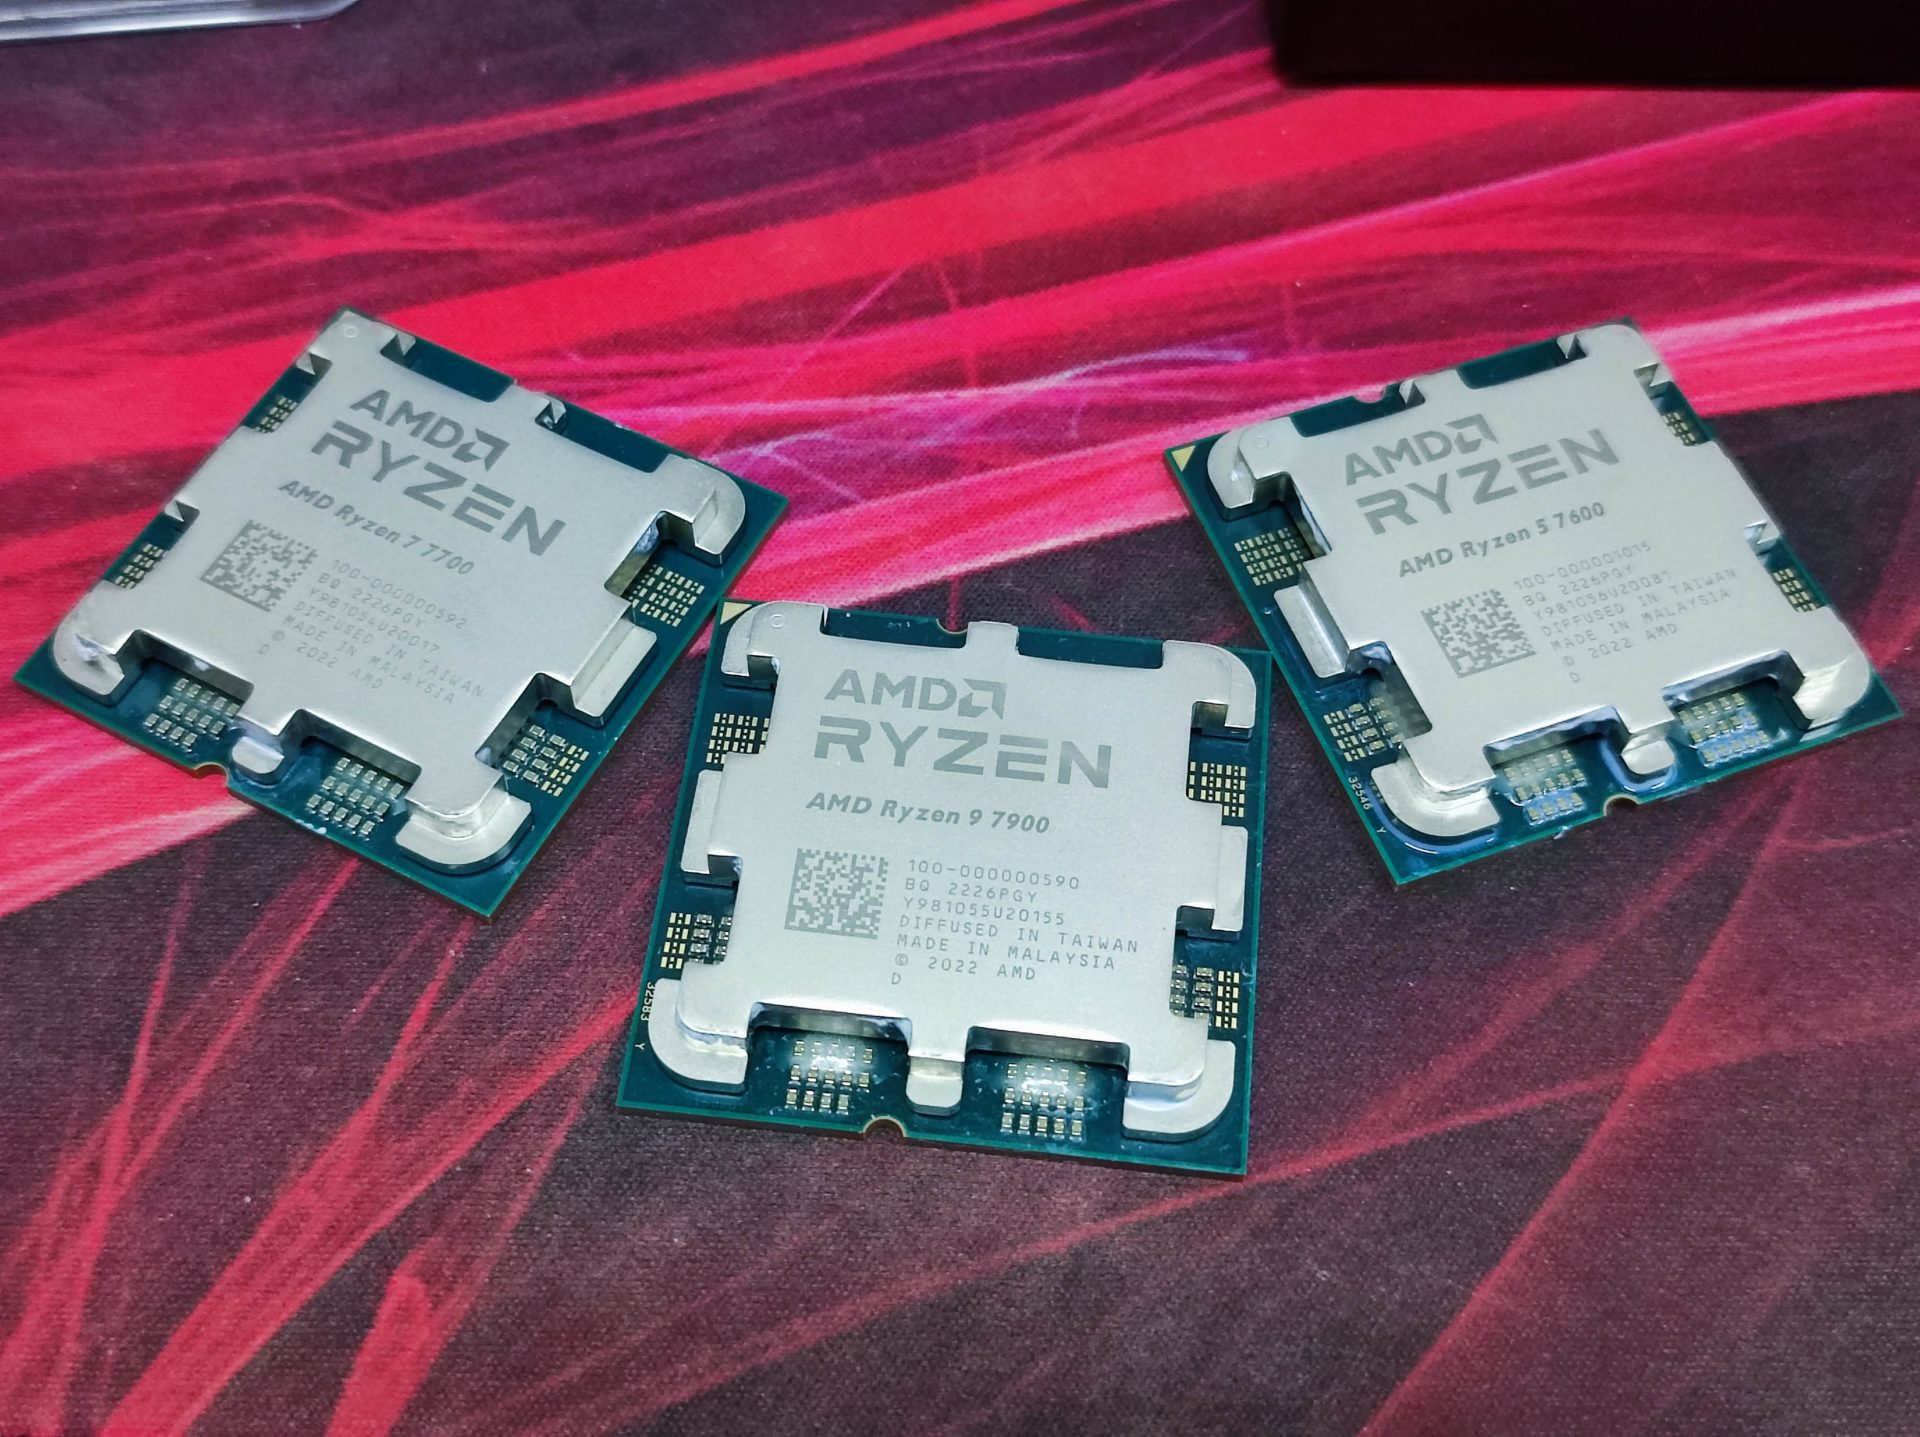 AMD Ryzen 9 7900, Ryzen 7 7700, Ryzen 5 7600 65W Processors Review -  Efficiency without (much) compromise - The Tech Revolutionist